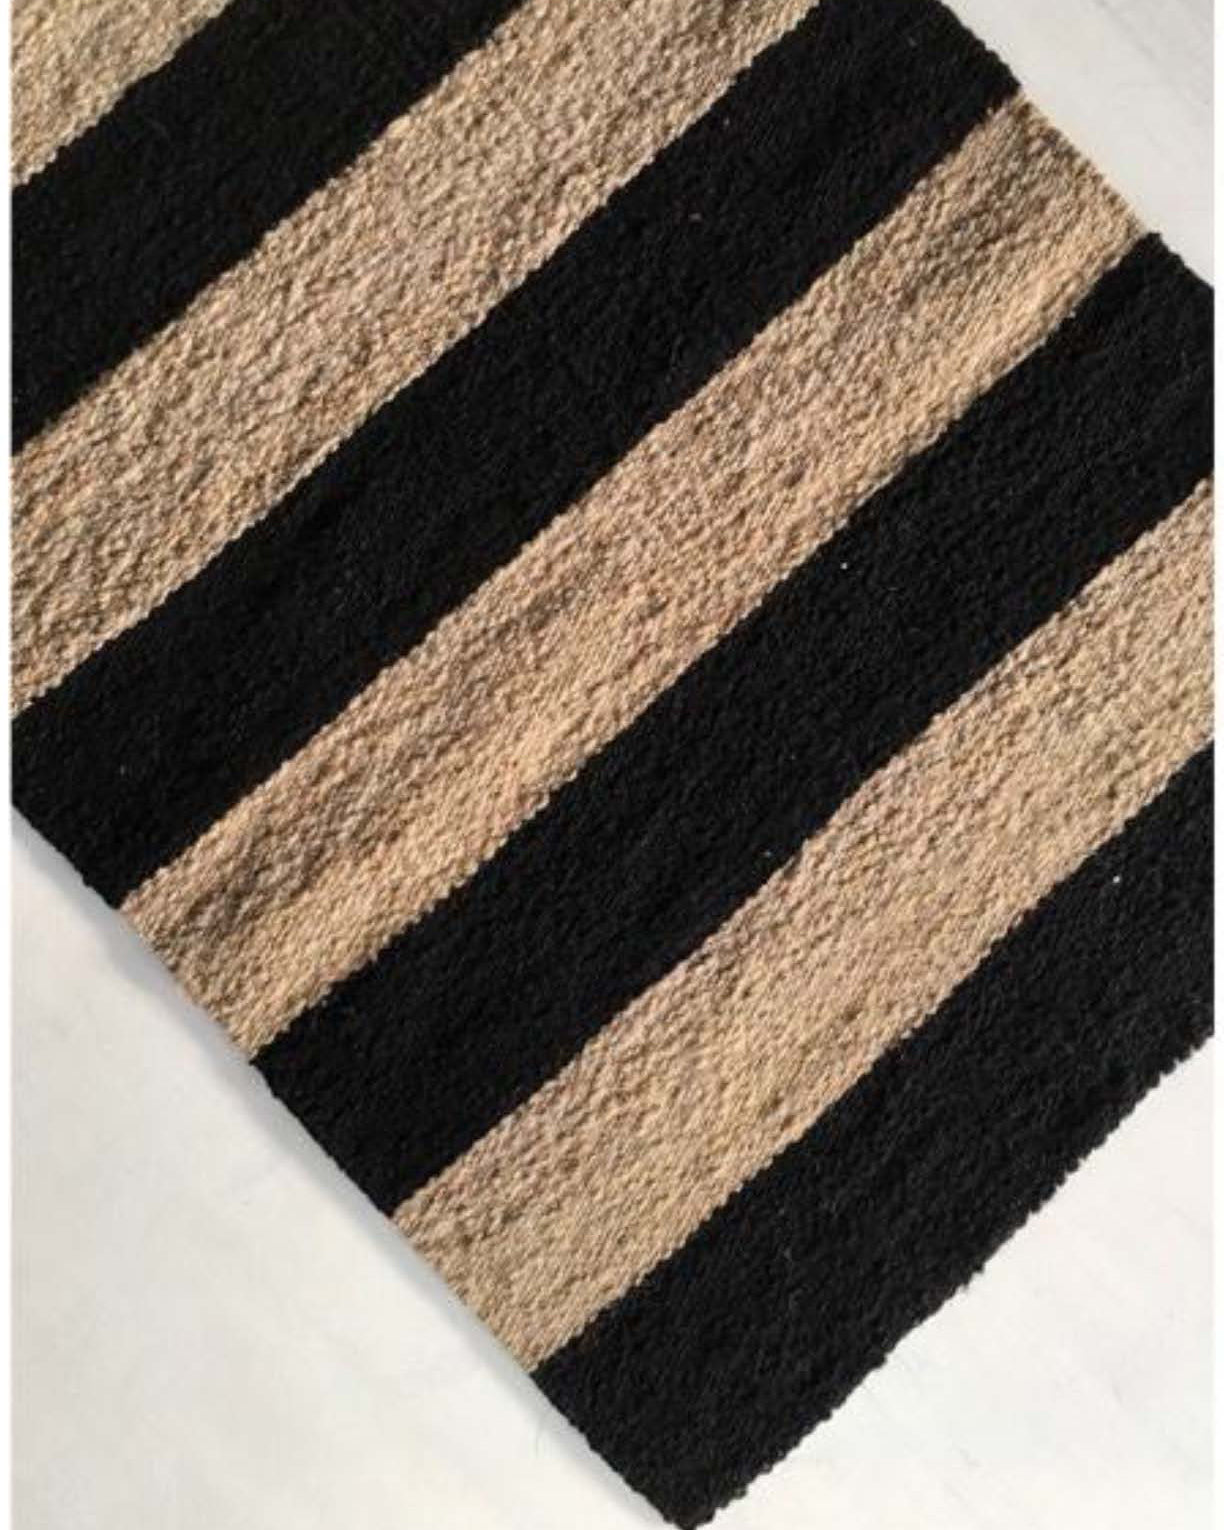 Handwoven wool rug black and beige